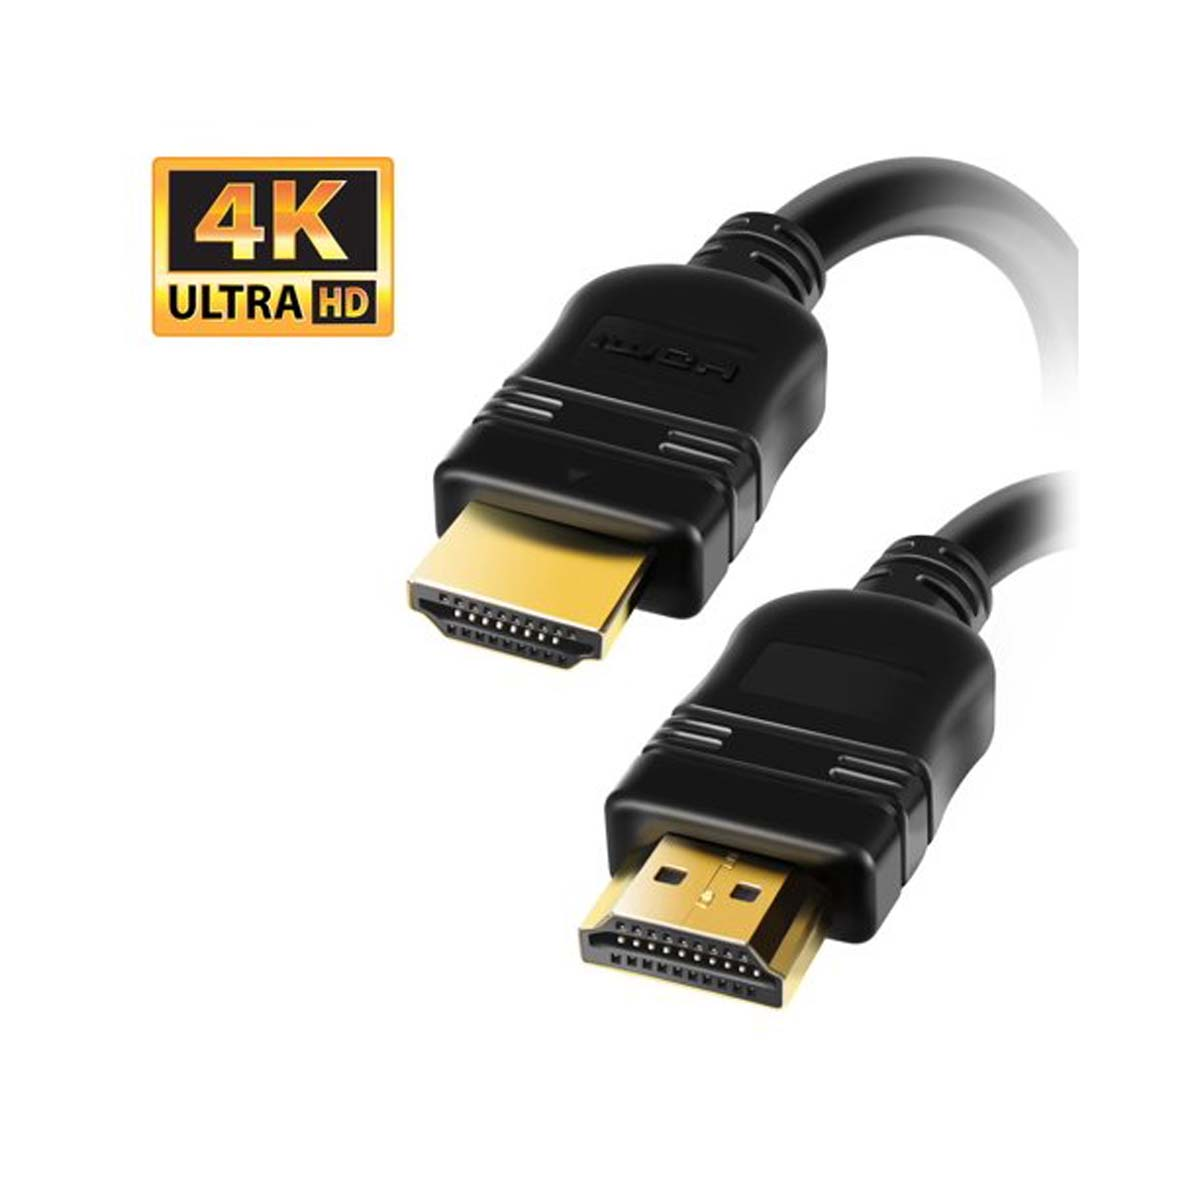 VIVANCO 47104 HDMI Kabel